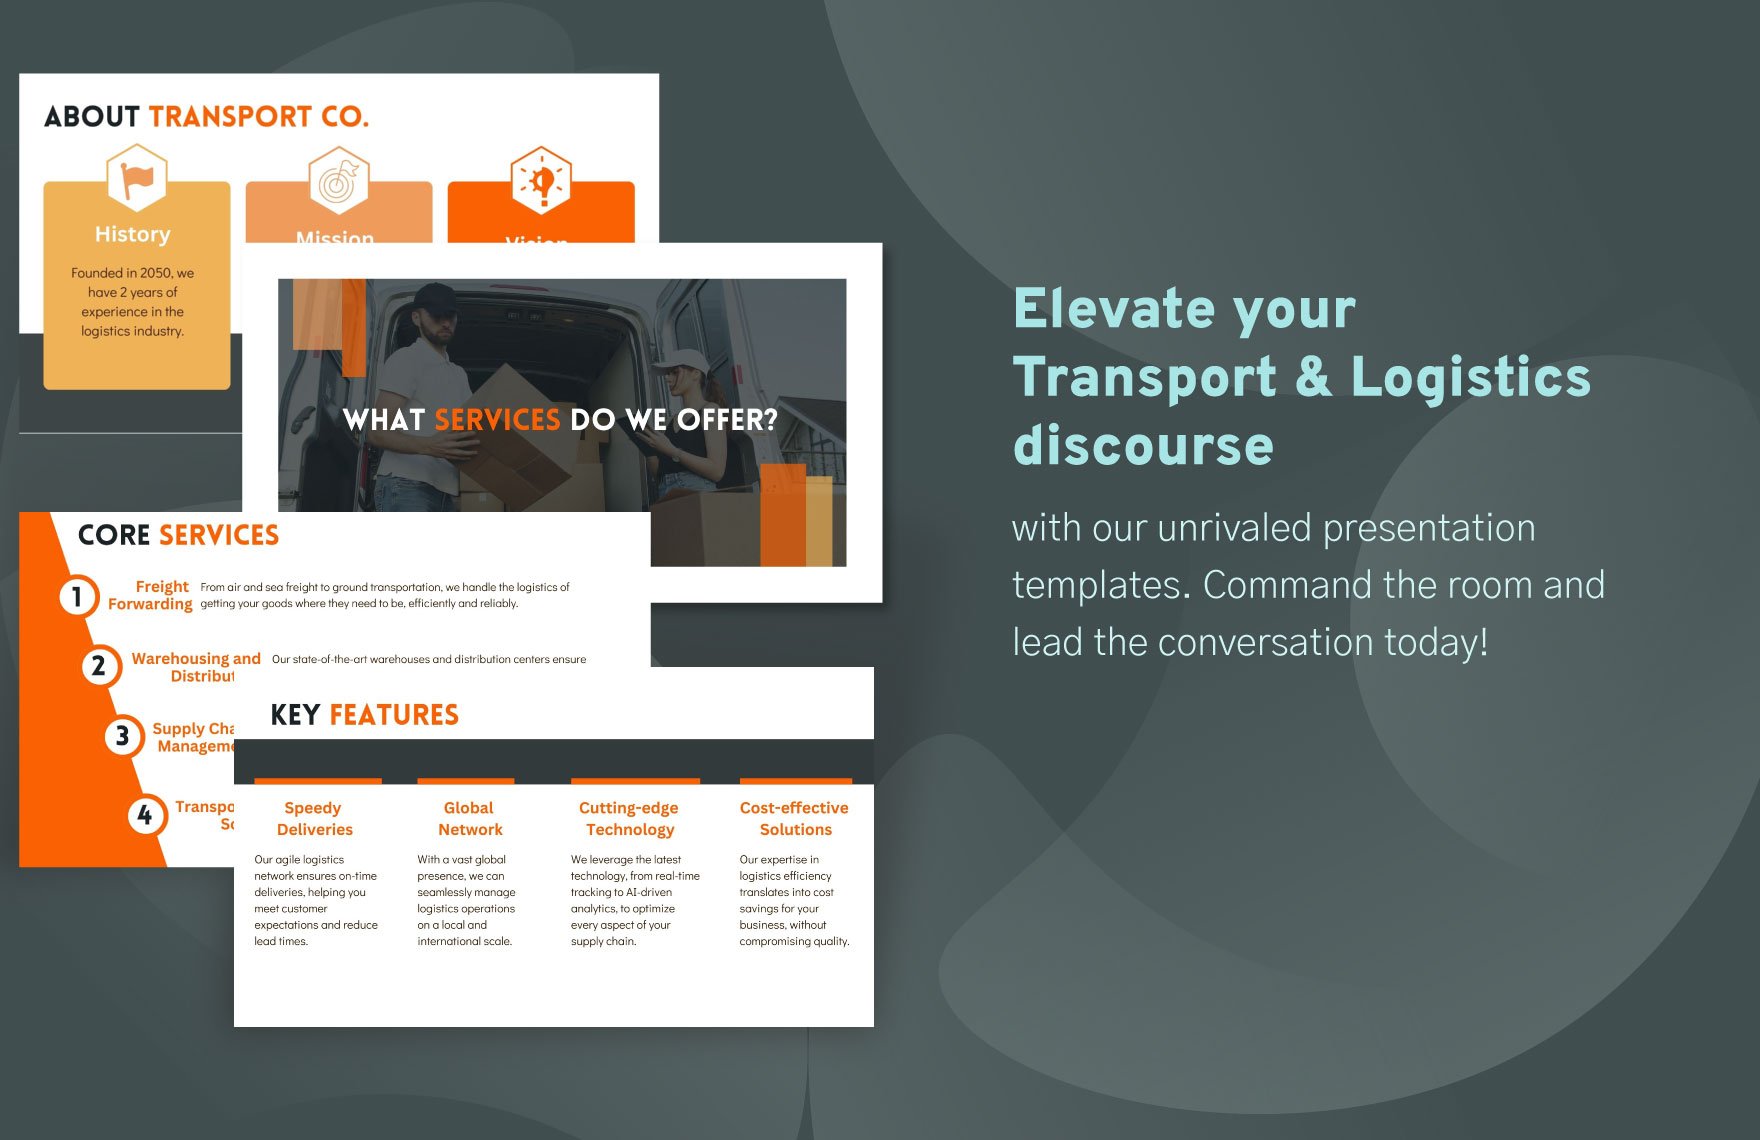 Transport and Logistics Services Presentation Template